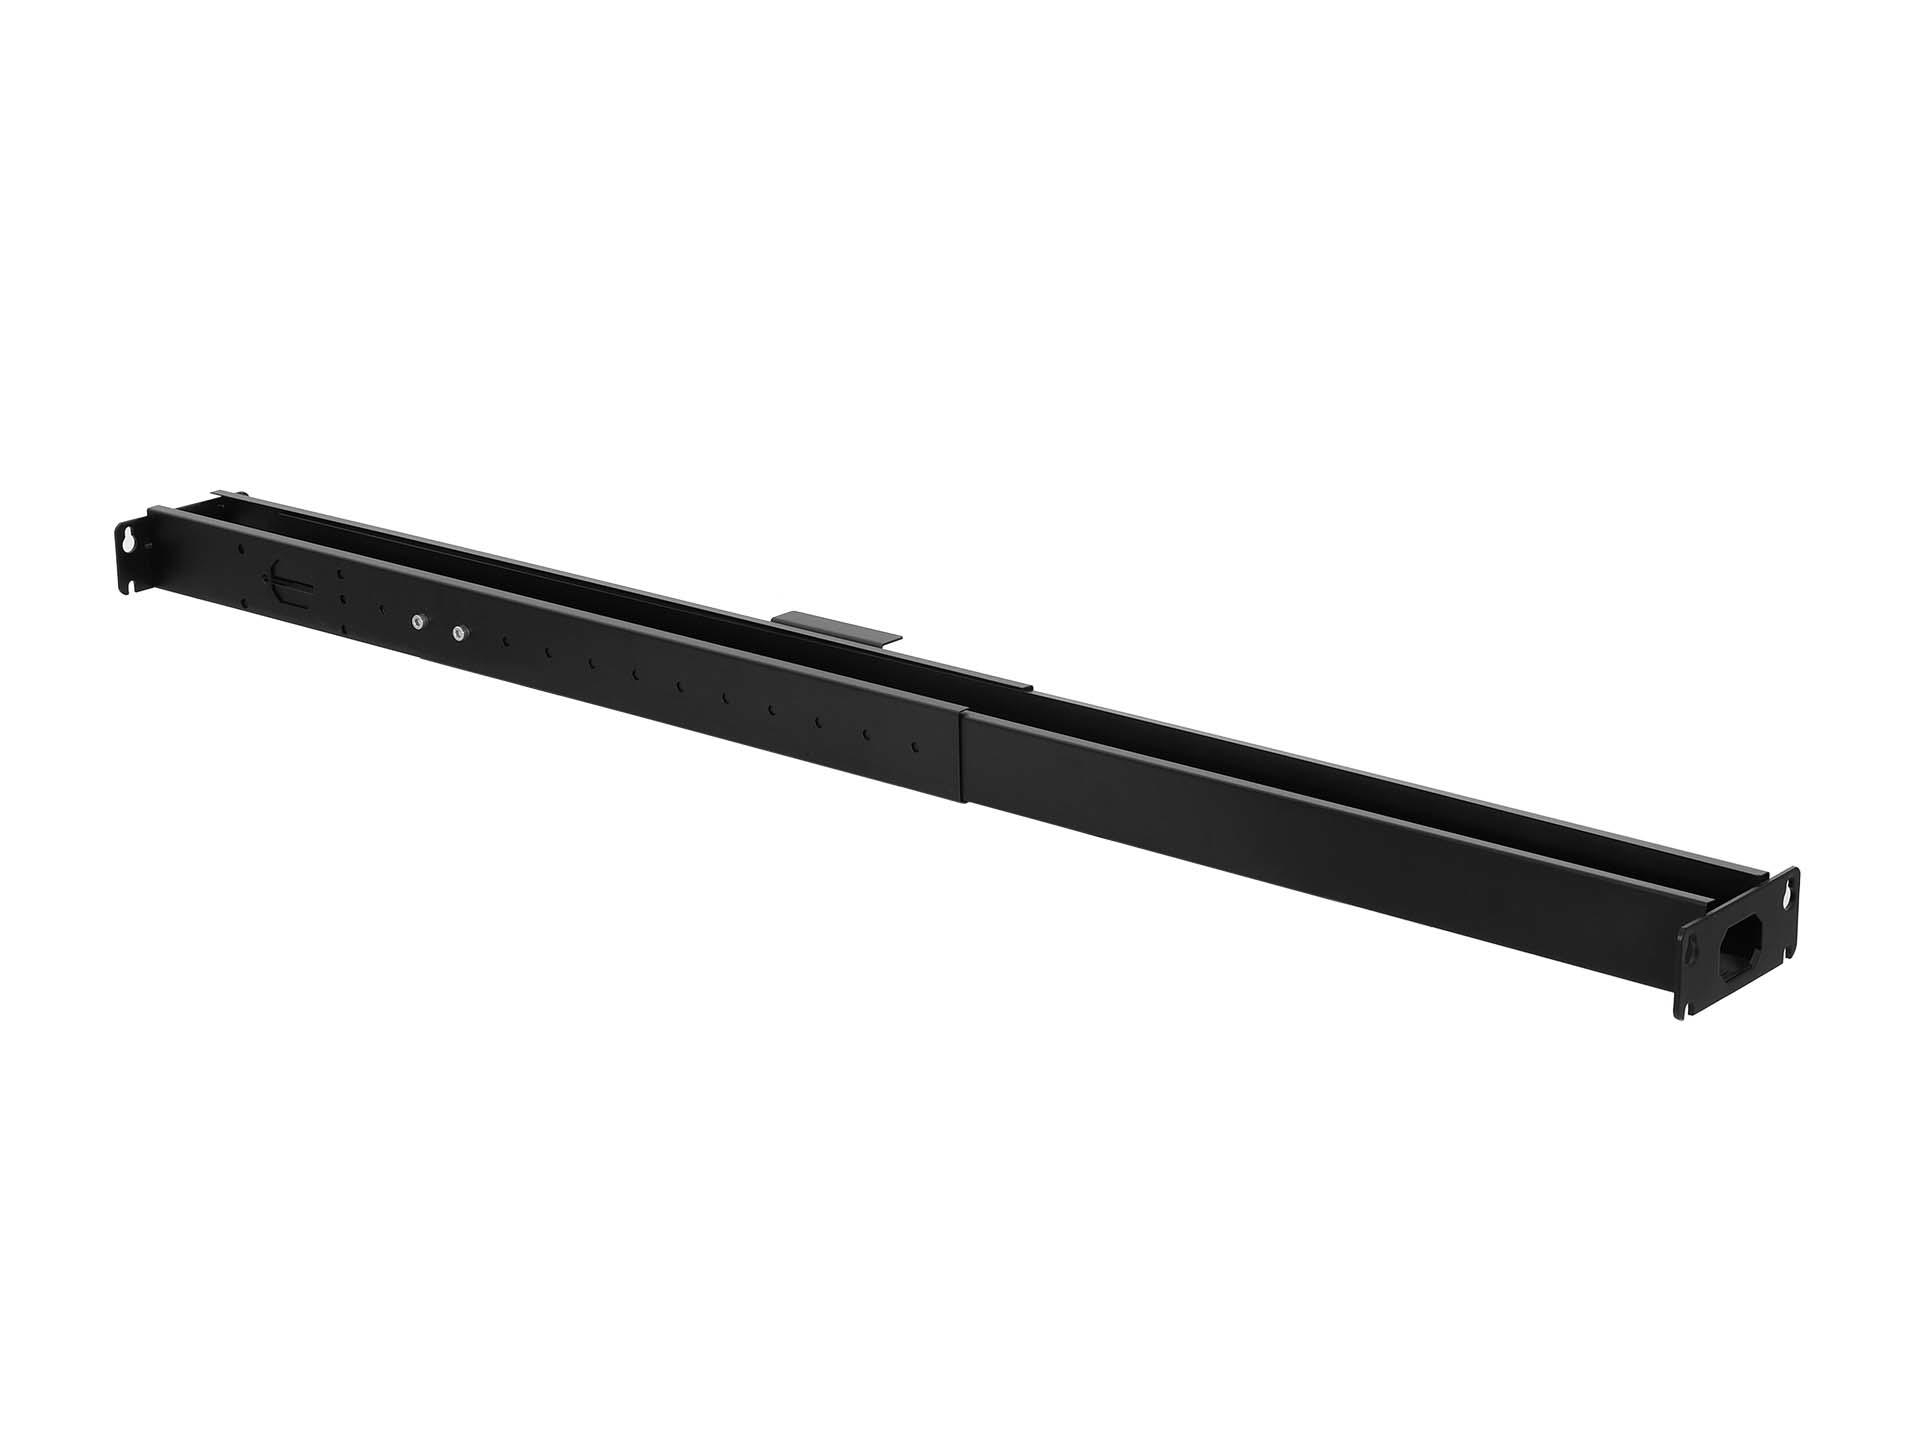 TUBE verstelbare framebalk 151-233 cm inclusief Z-bladsteun + 18 bladschroeven